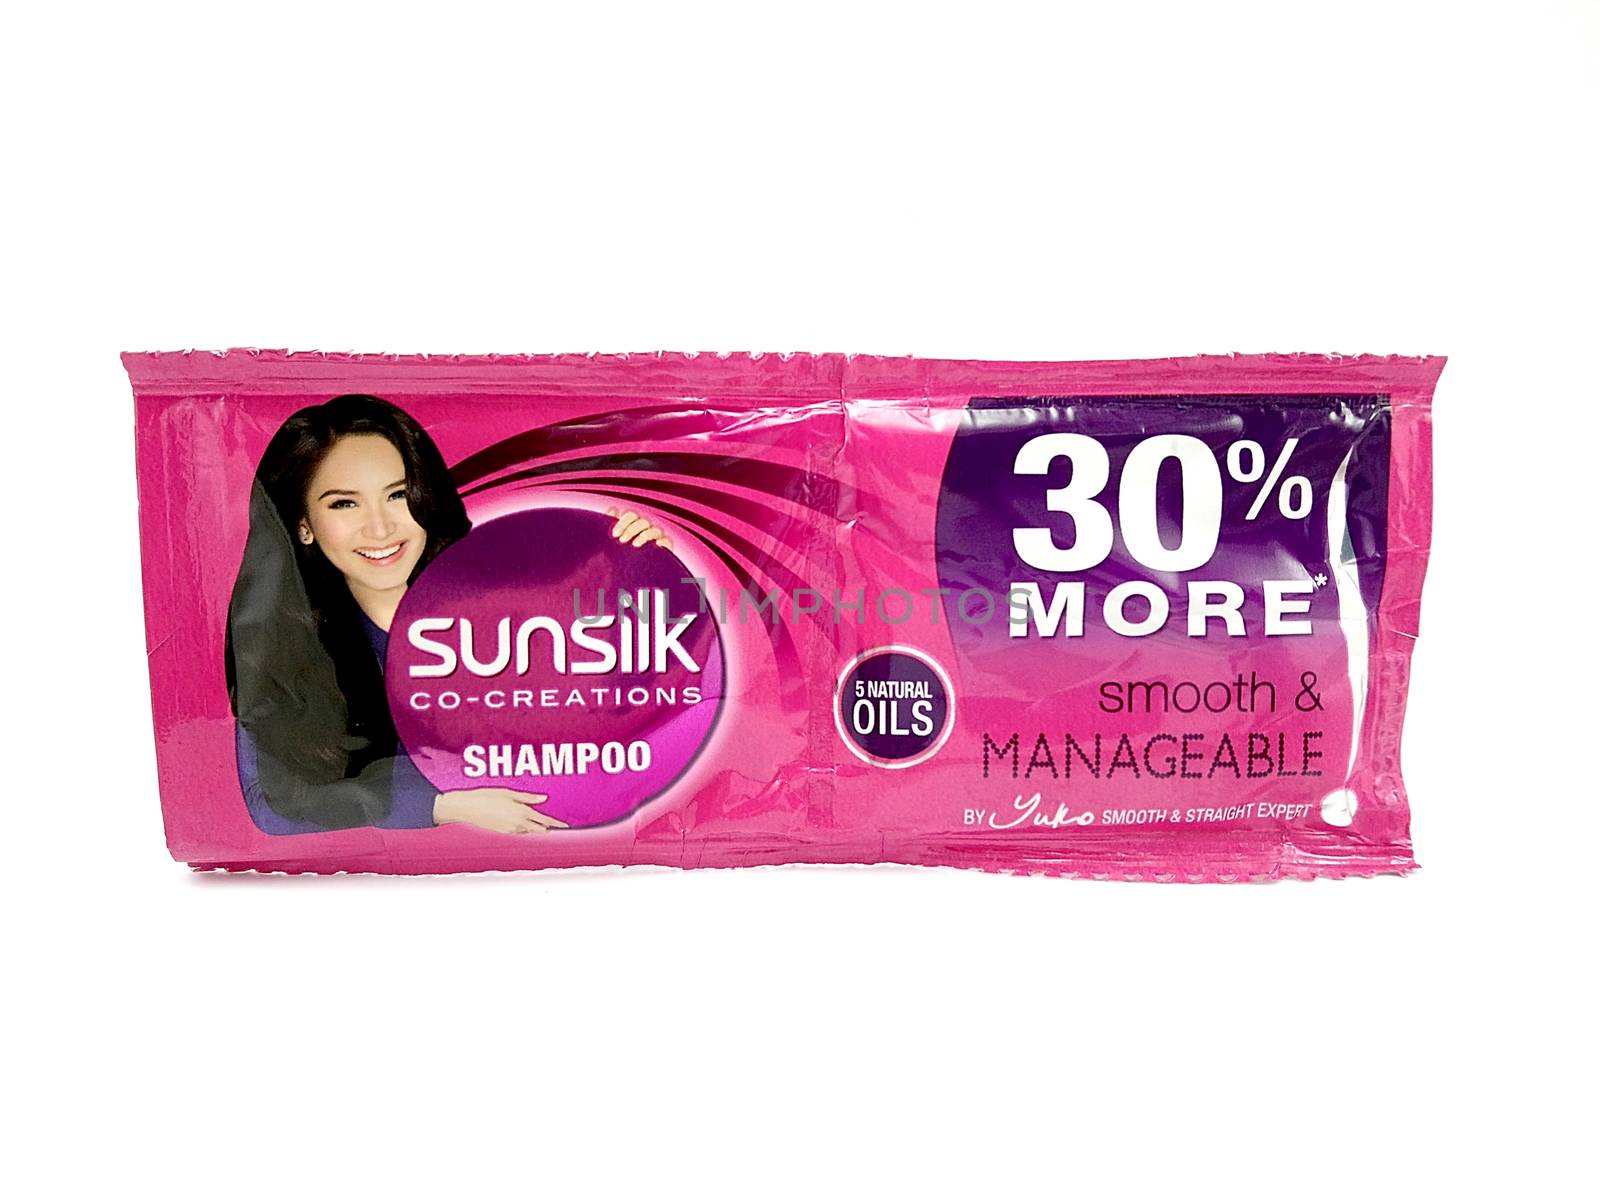 Sunsilk shampoo sachet in Manila, Philippines by imwaltersy